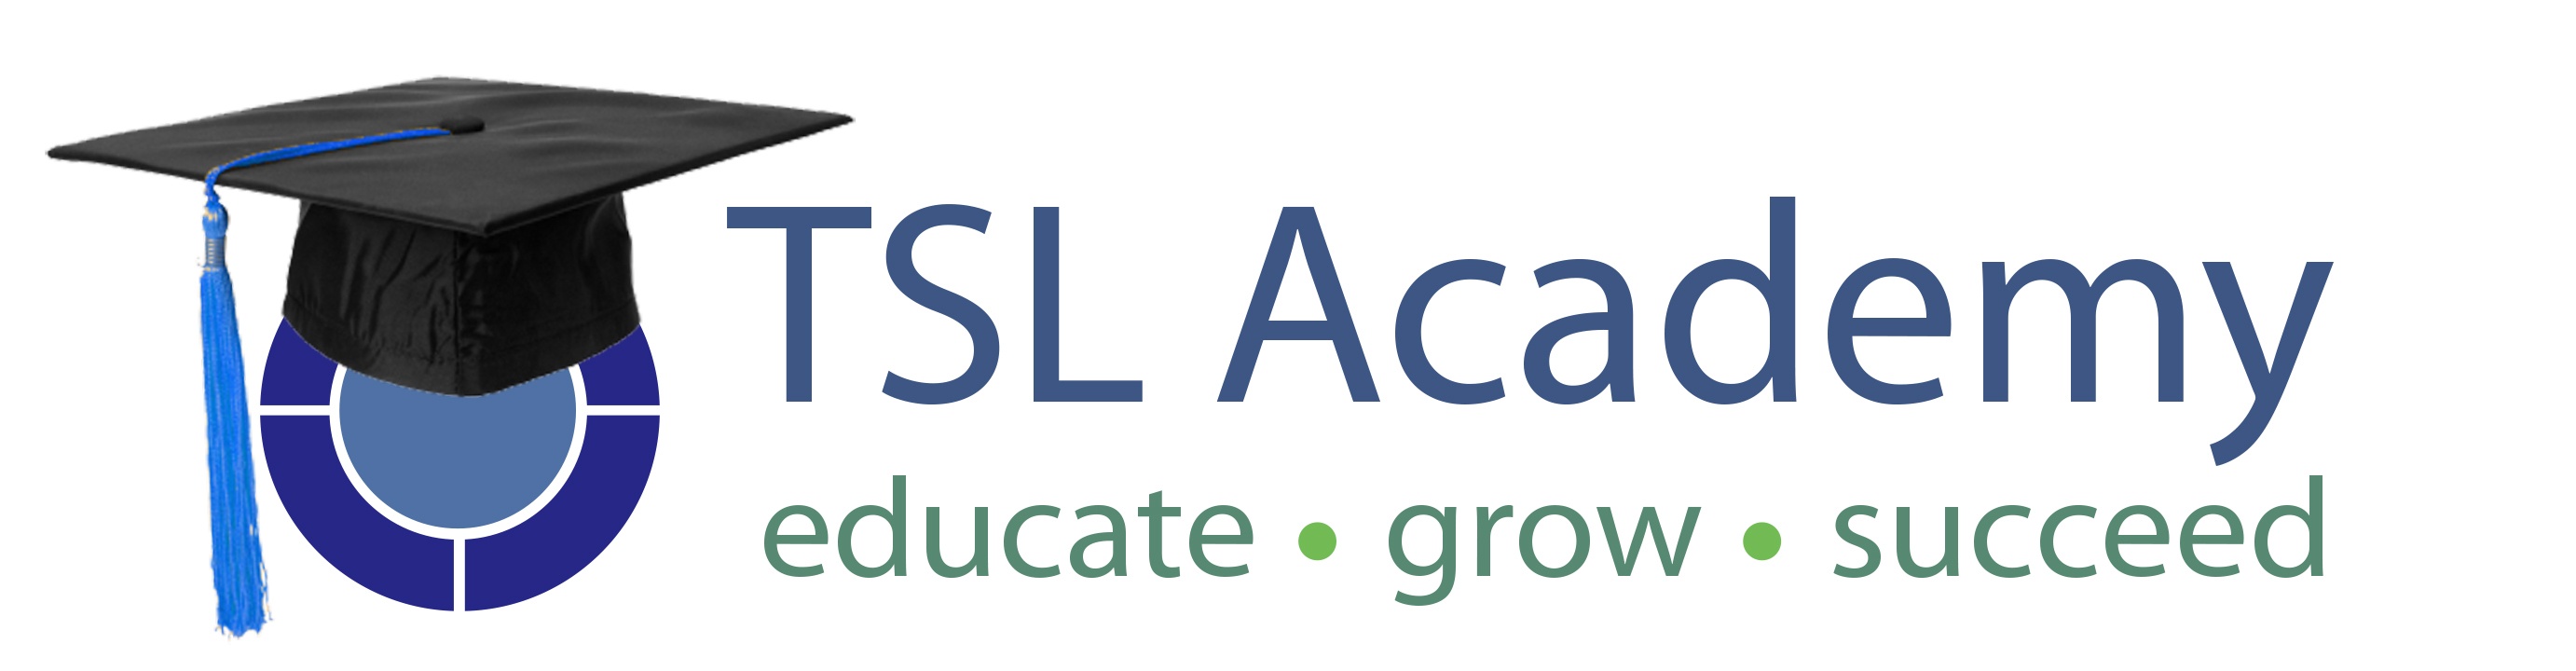 TSL_Academy-hi.jpg